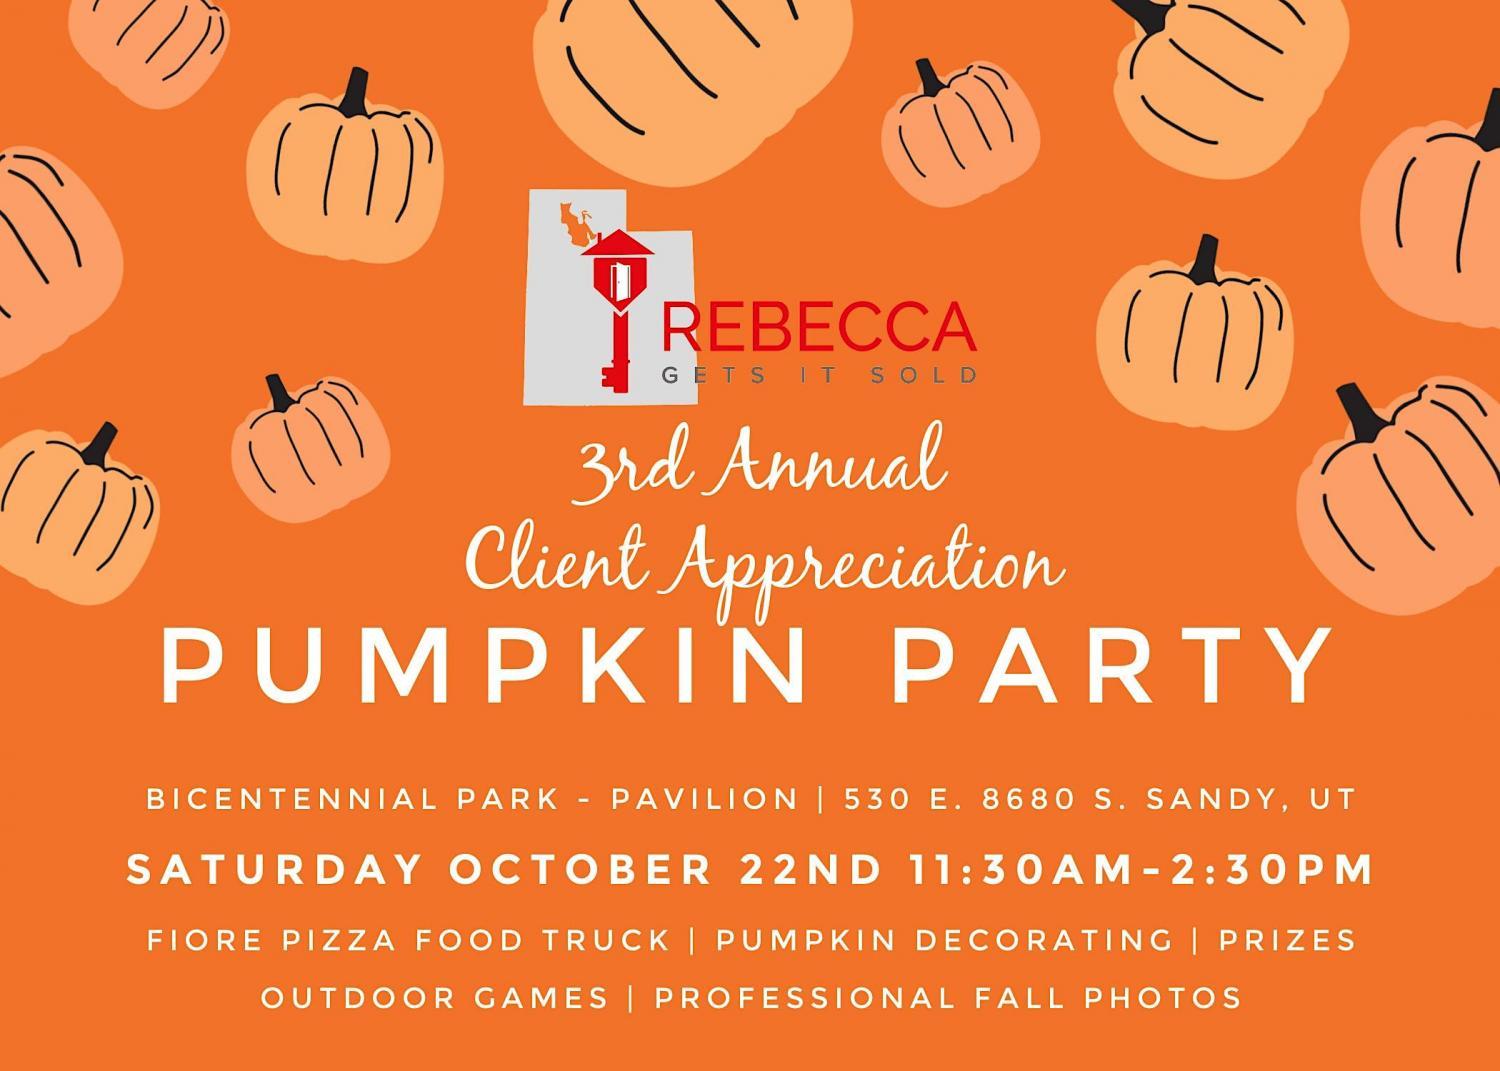 3rd Annual Client Appreciation Pumpkin Party!
Sat Oct 22, 11:30 AM - Sat Oct 22, 2:30 PM
in 2 days